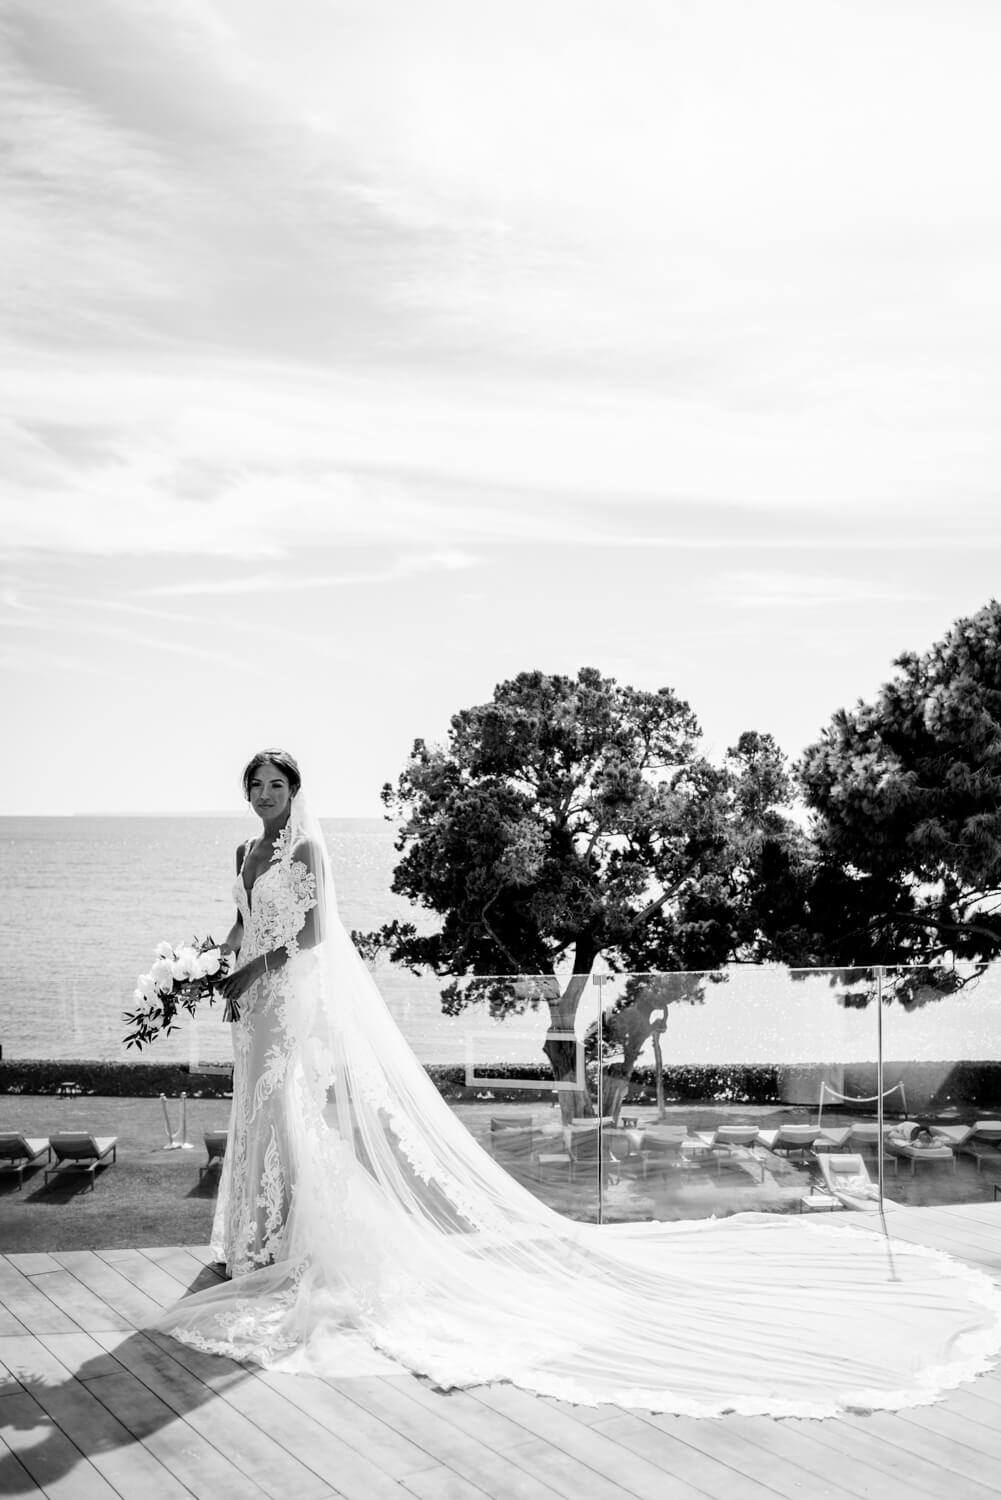 Ibiza Bride Wedding Dress, Nikki beach - seaview, Monochrome